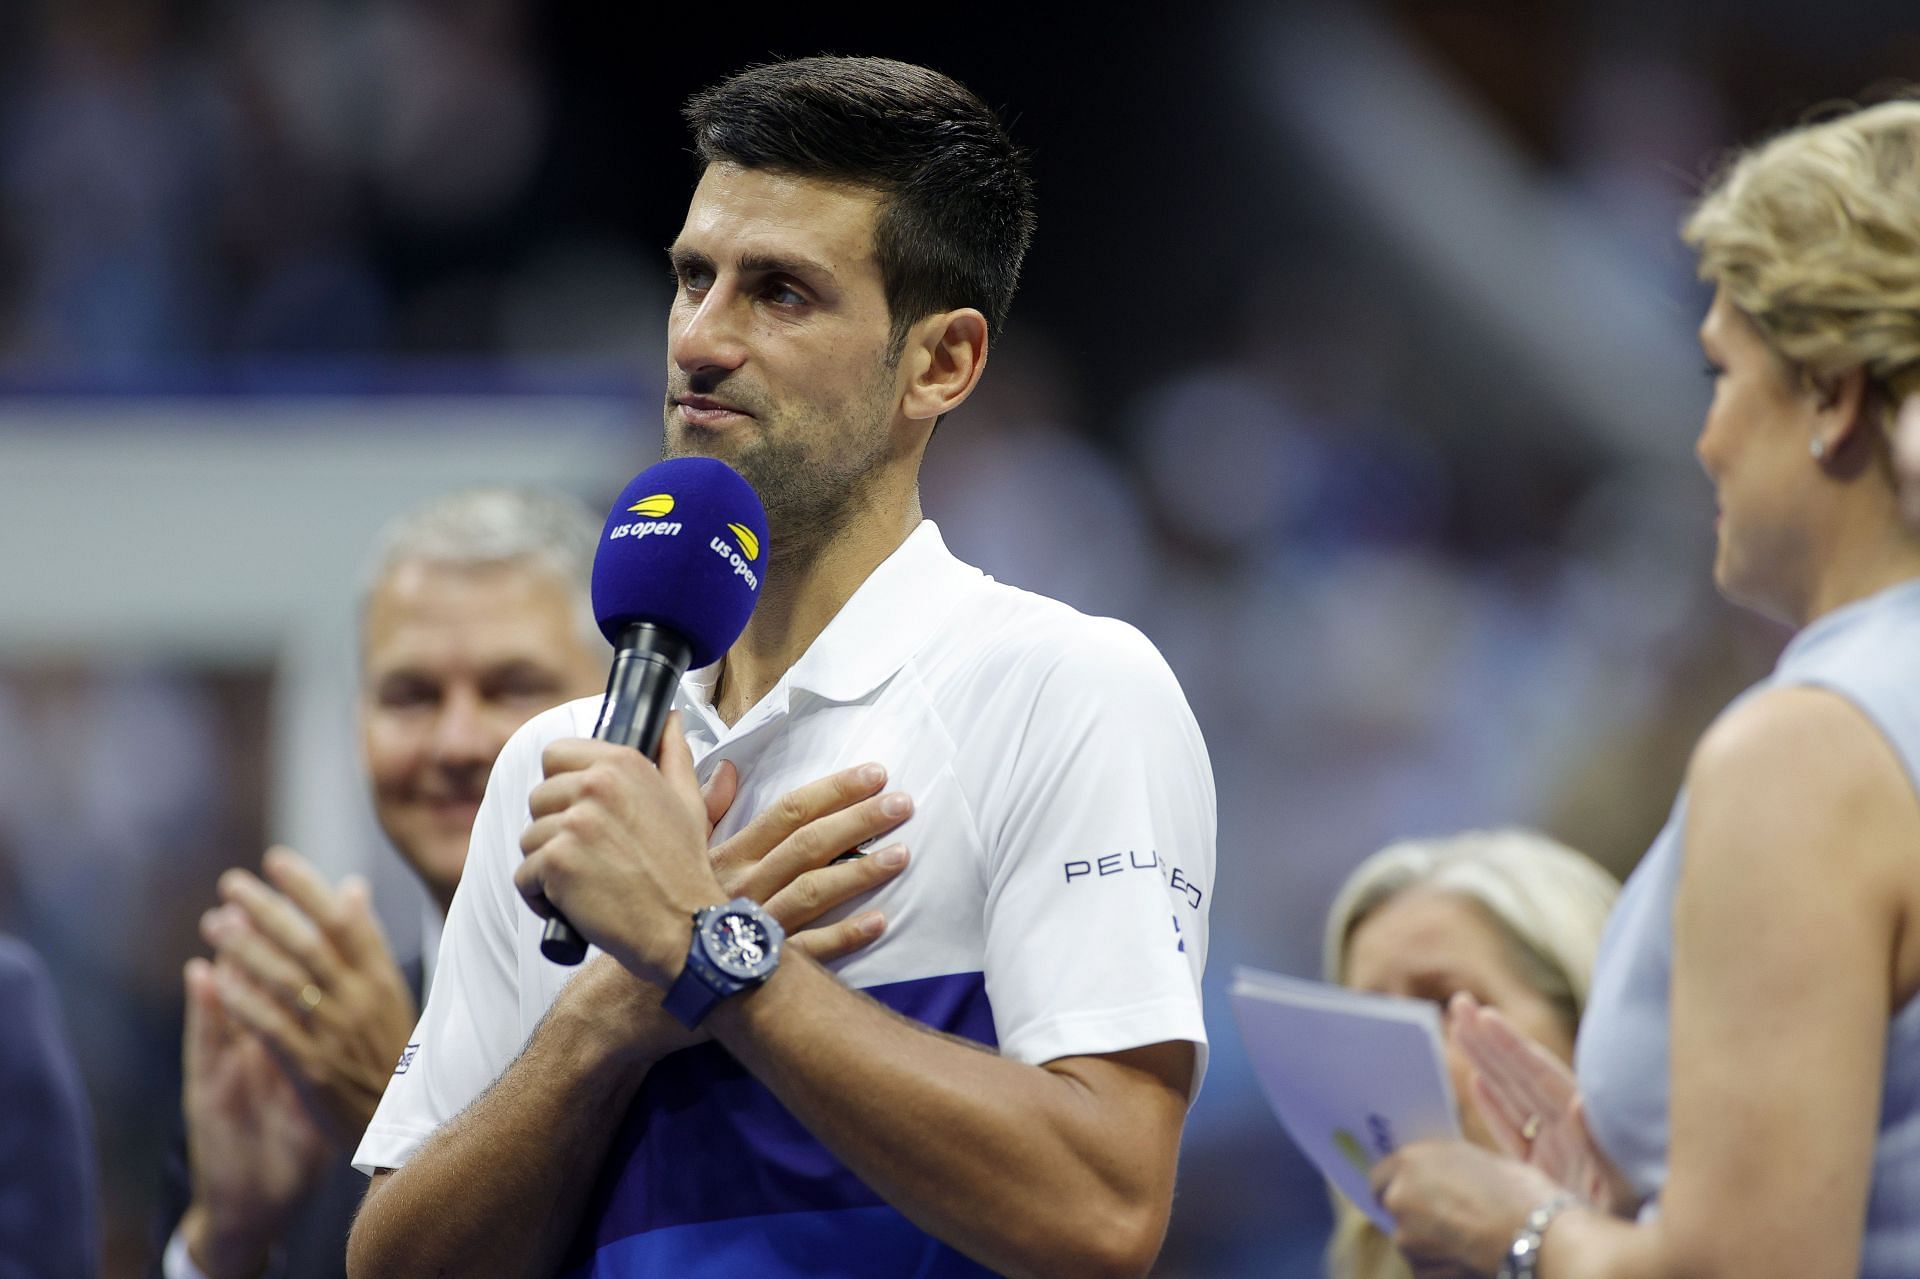 Novak Djokovic thanks the crowd at the 2021 US Open